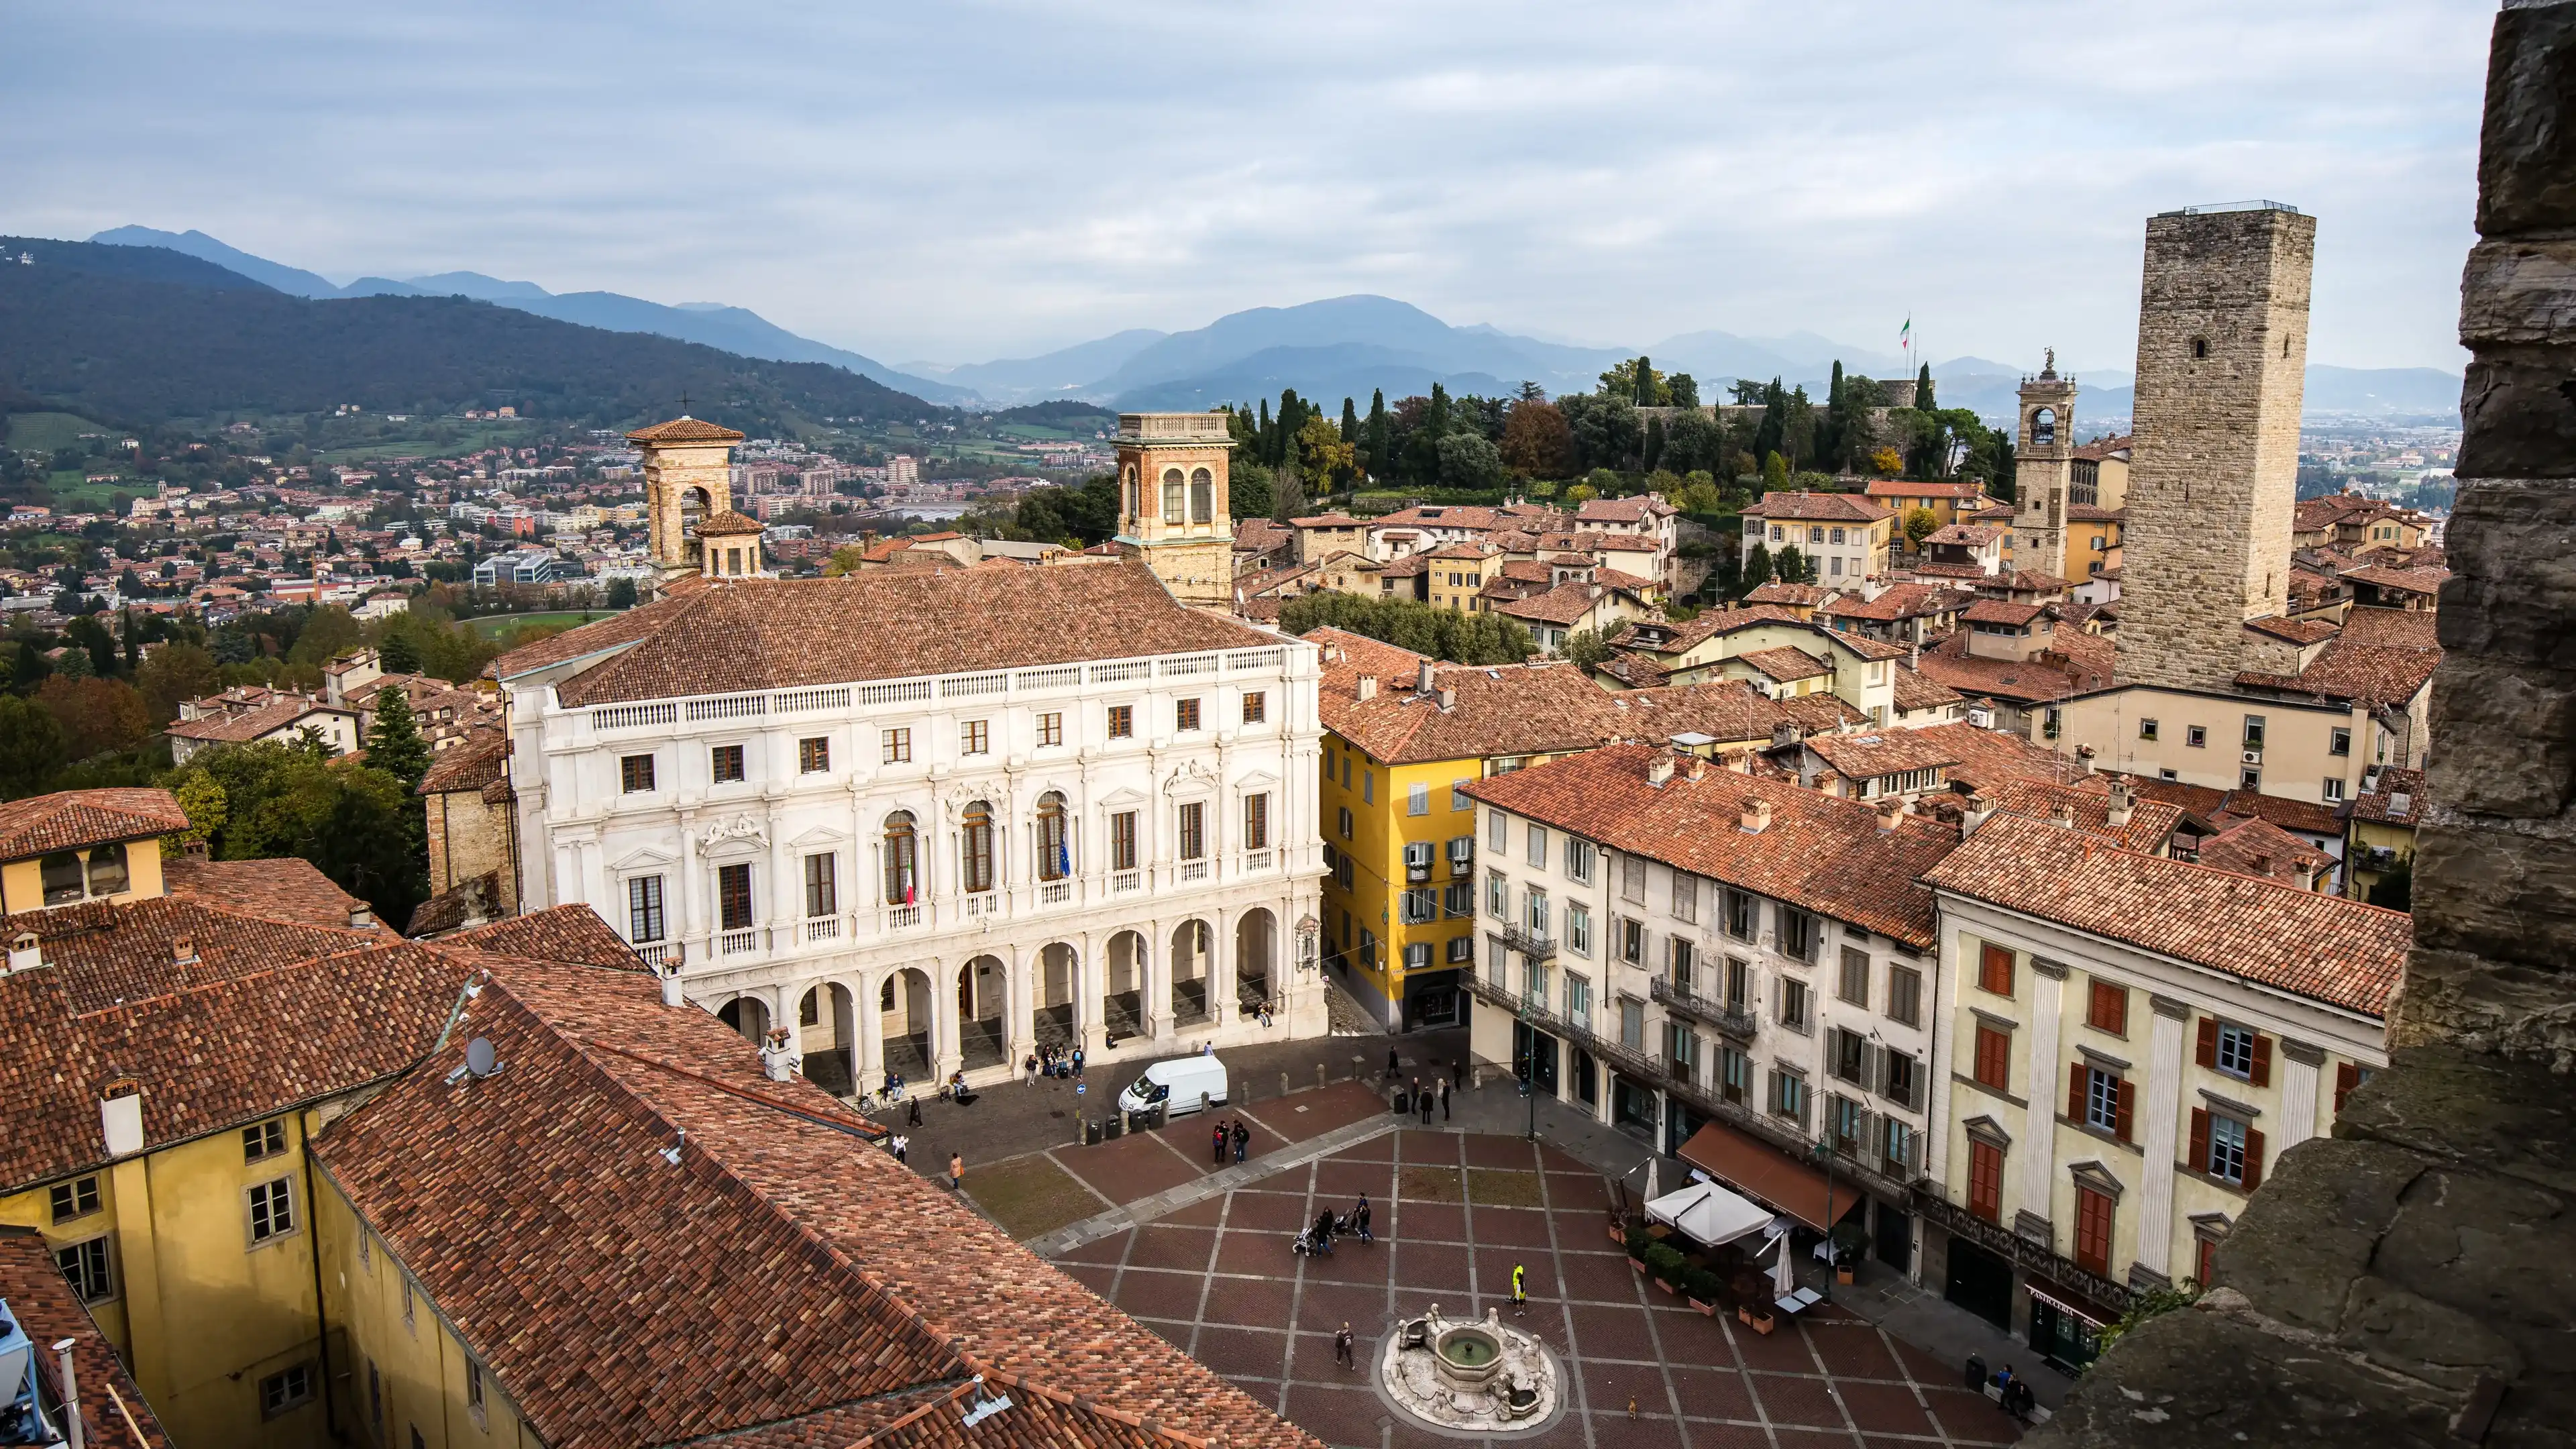 Best Bergamo hotels. Cheap hotels in Bergamo, Italy